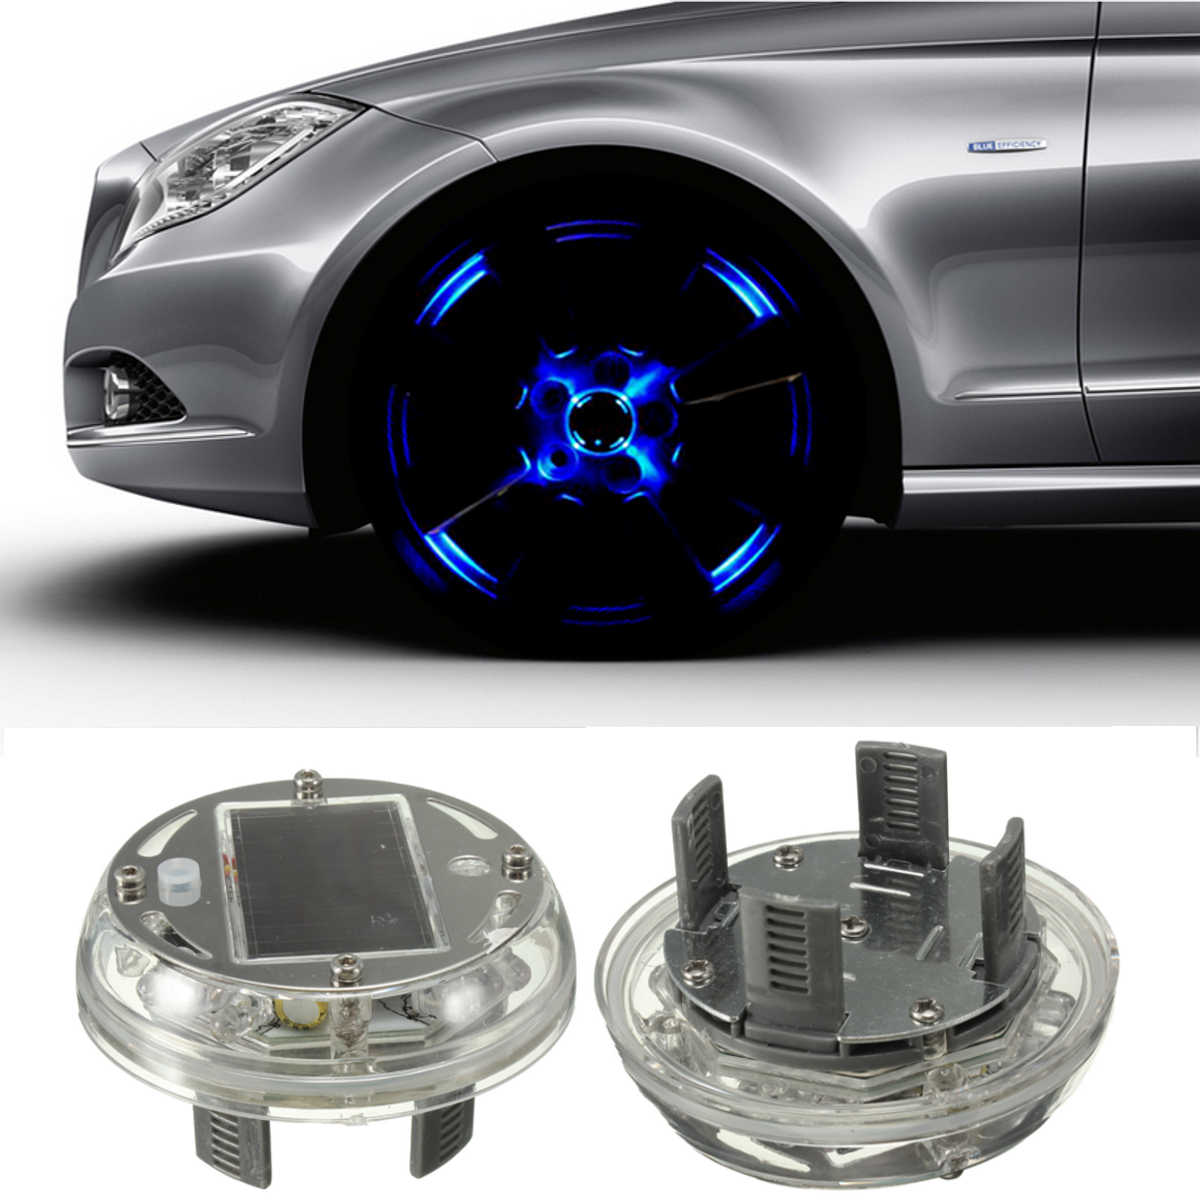 

Solar Energy LED Car Wheel Tire Rim Flash Light Decoration Lamp 4 Flashing Modes